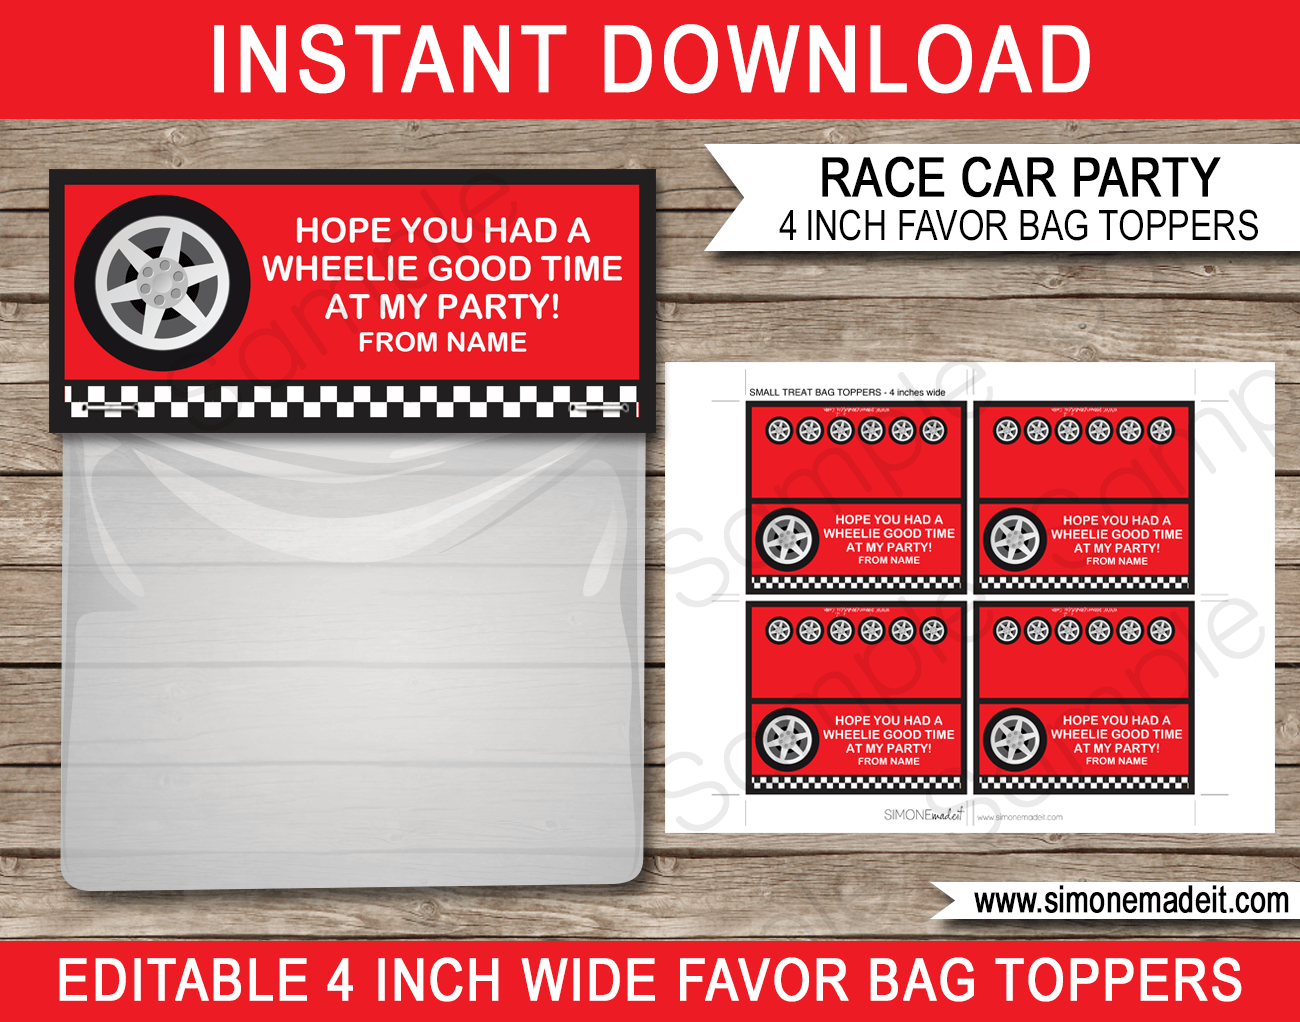 Race Car Party Favor Bag Toppers | Race Car Birthday Party Favors | Editable DIY Template | $3.00 INSTANT DOWNLOAD via SIMONEmadeit.com